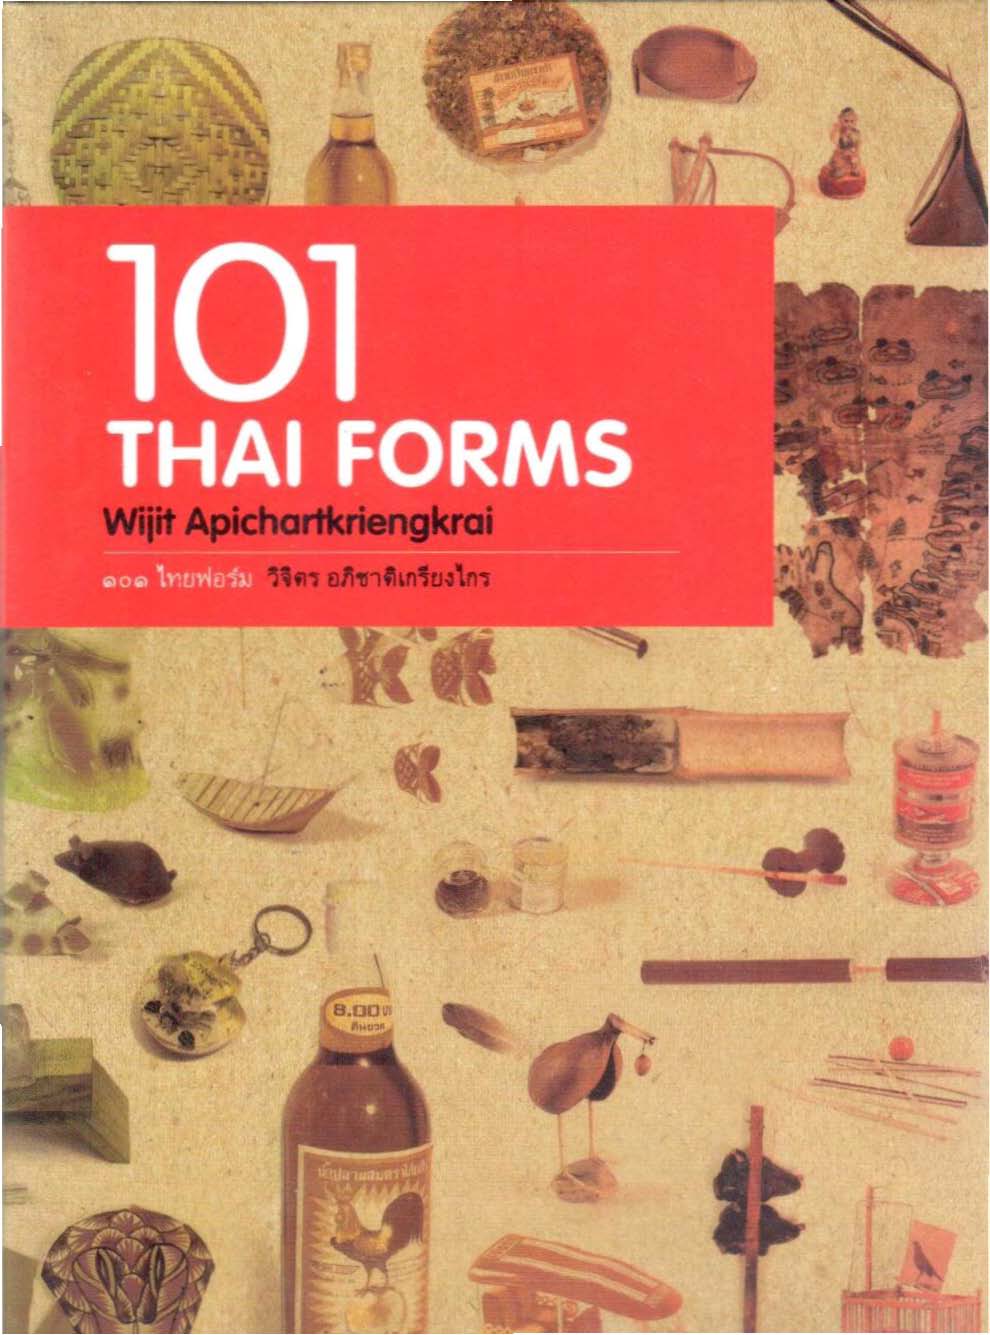 101 Thai Forms